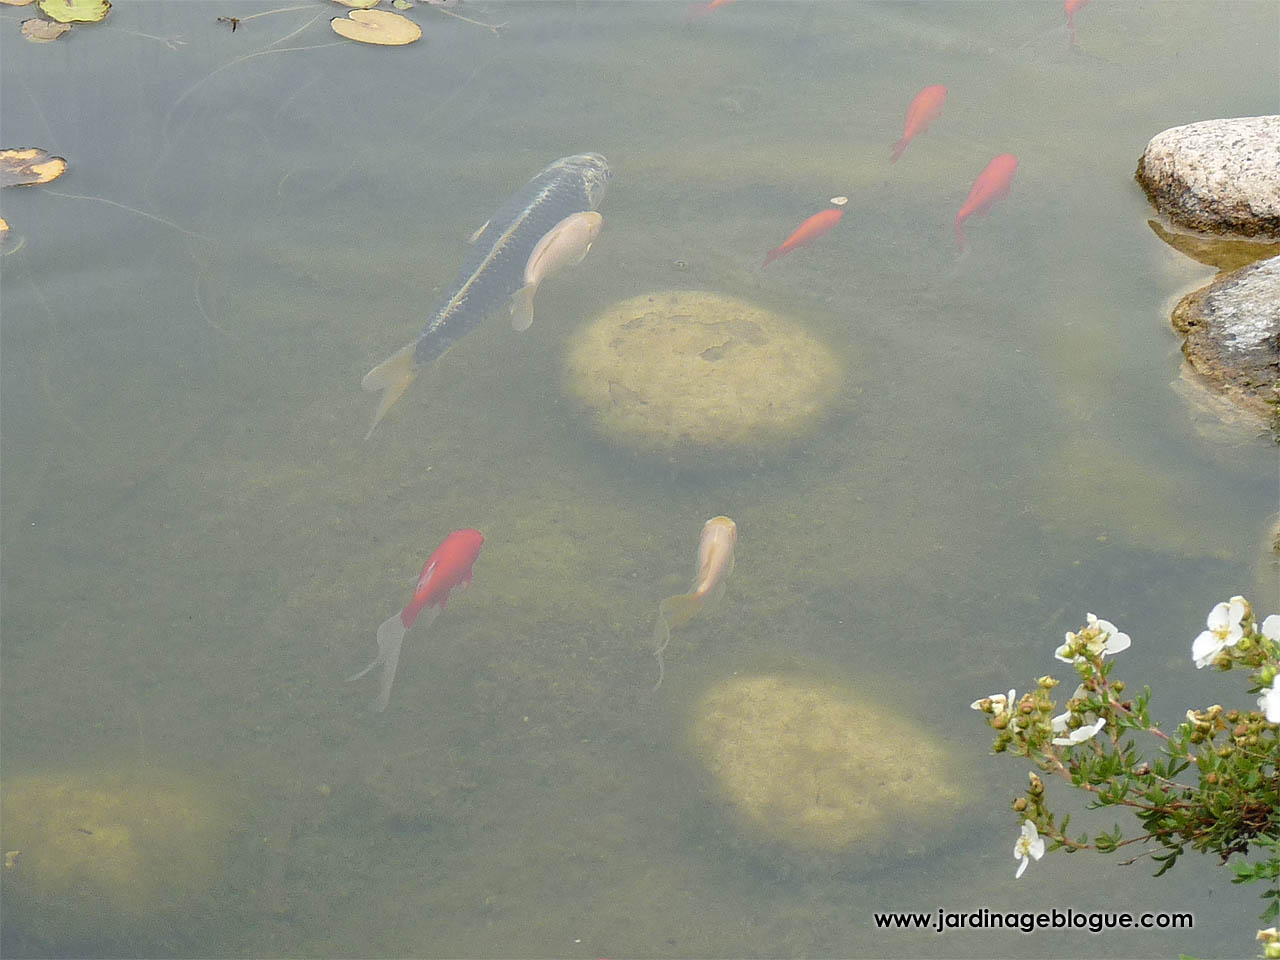 Attraper poissons au bassin